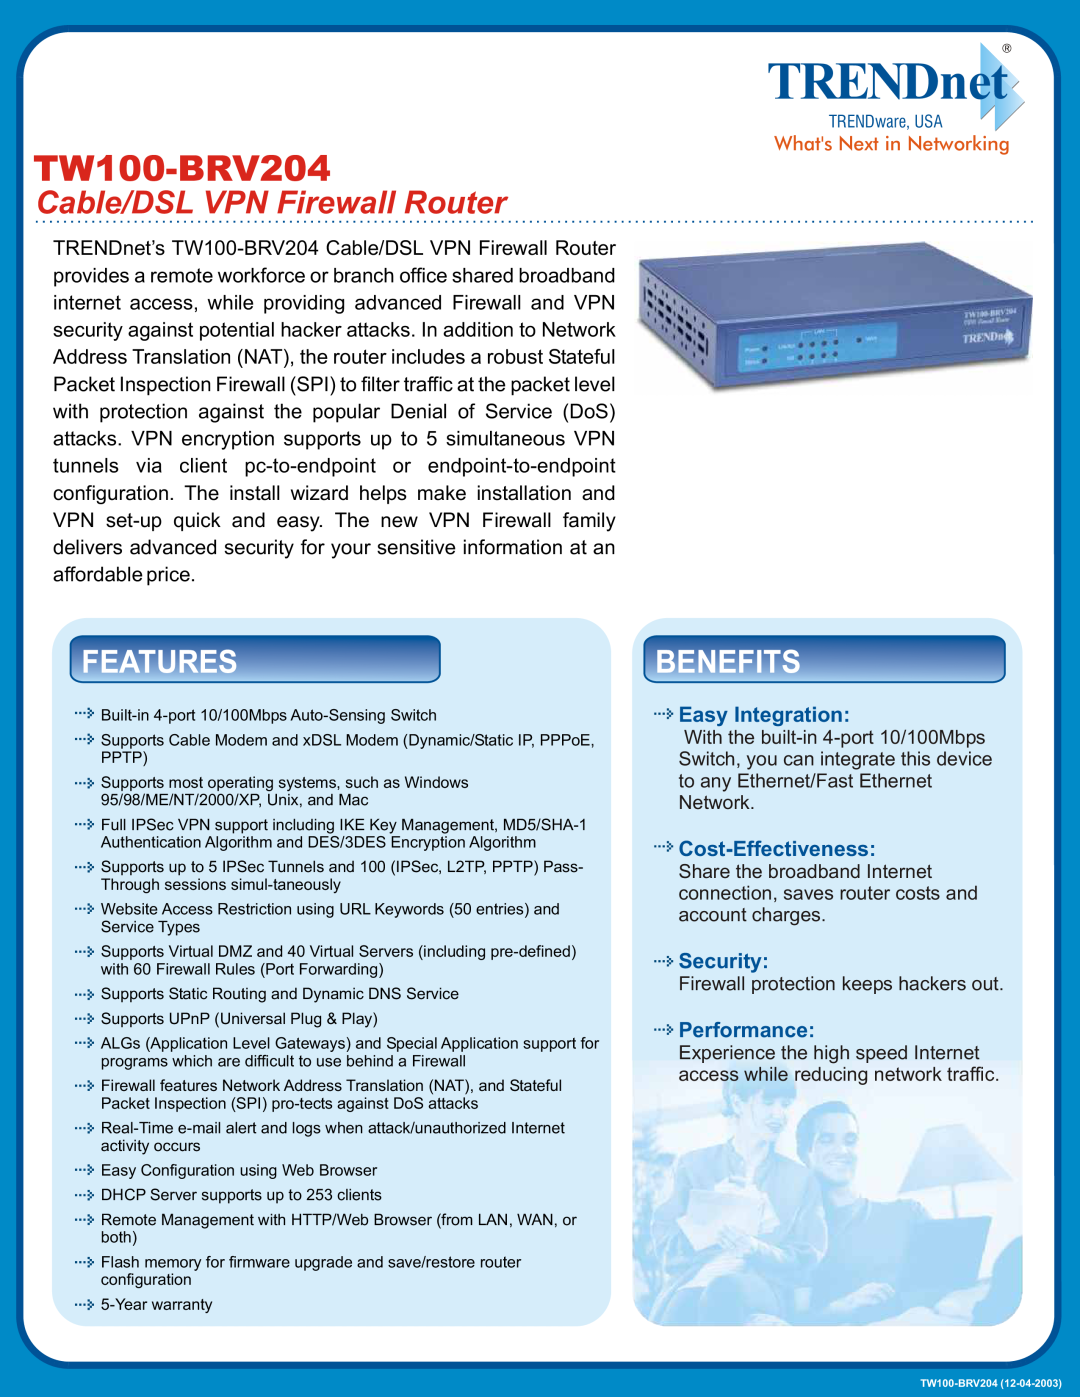 TRENDnet TW100-BRV204 warranty Features, Benefits, TRENDnet, Cable/DSL VPN Firewall Router, Easy Integration, Security 